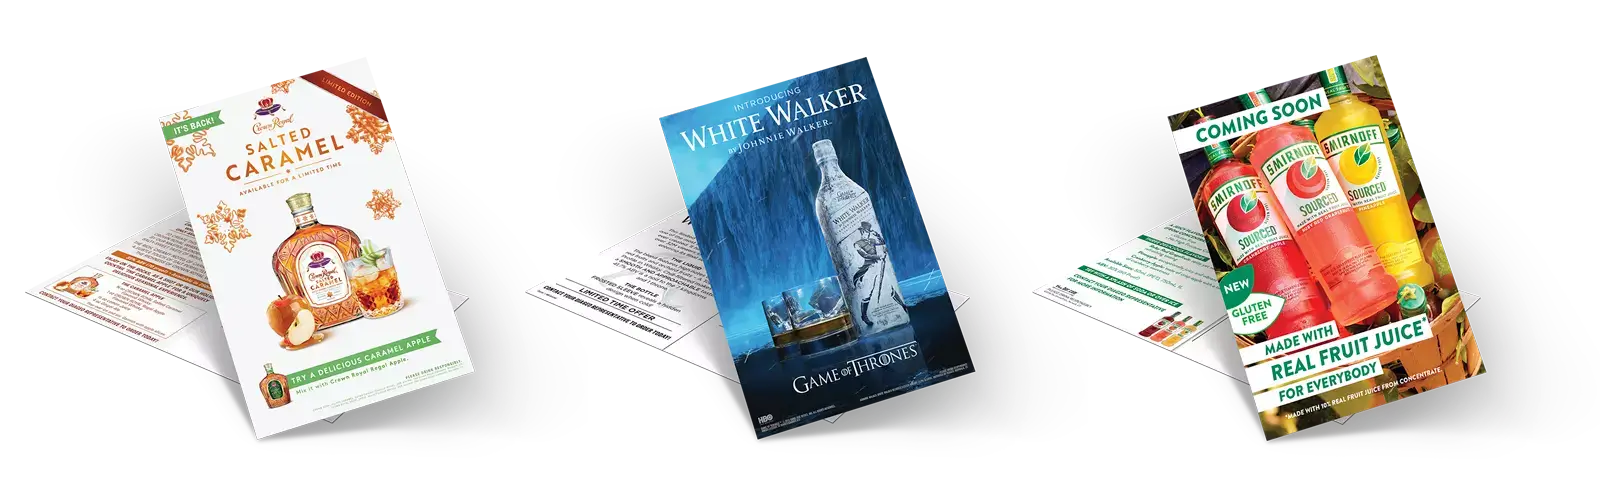 Diageo Cards - Crown Royal Salted Caramel, White Walker game of thrones, Smirnoff fruit